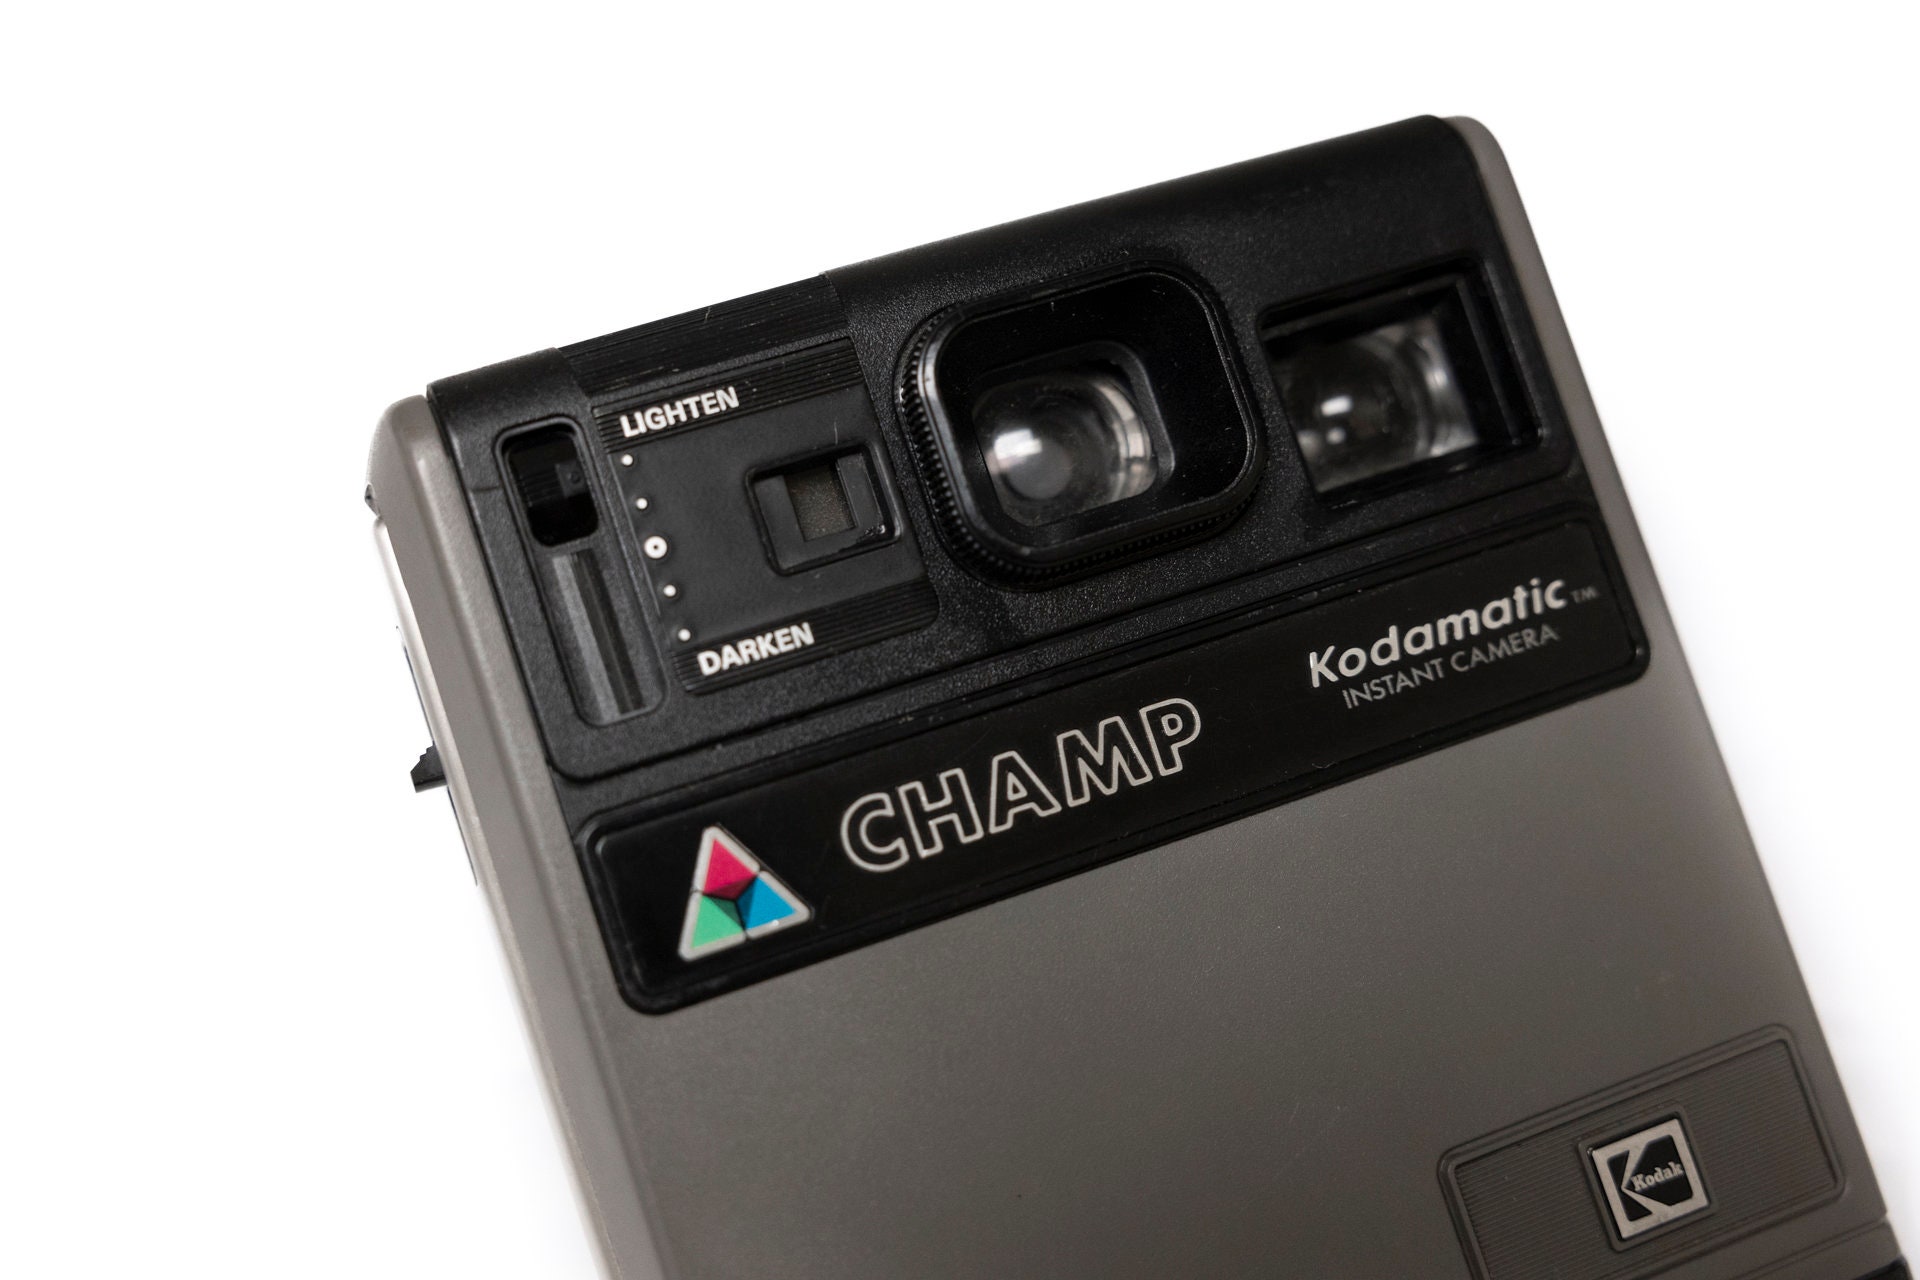 Get now Kodak Instant Digital Camera PRINTOMATIC in UAE